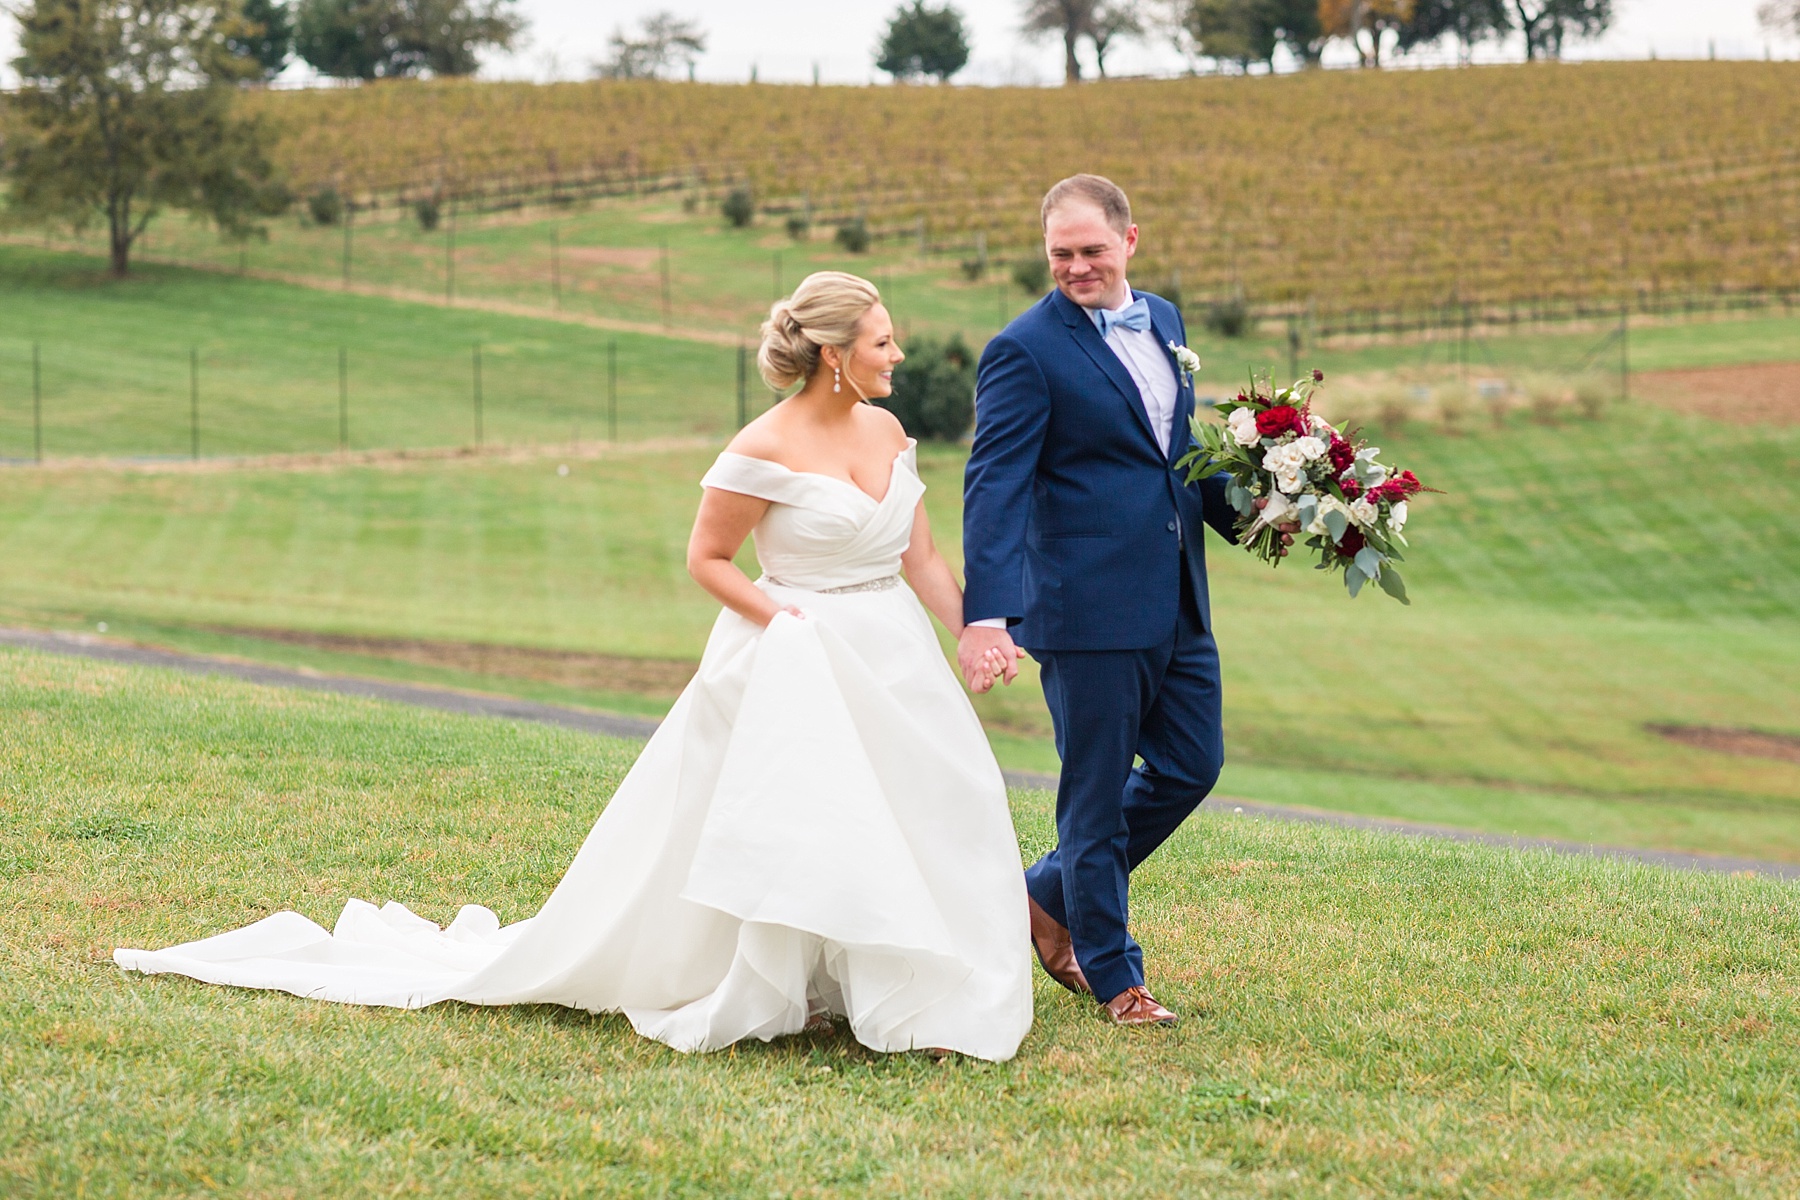  Alexandra Mandato Photography photographs couple at Stone Tower Winery on wedding day